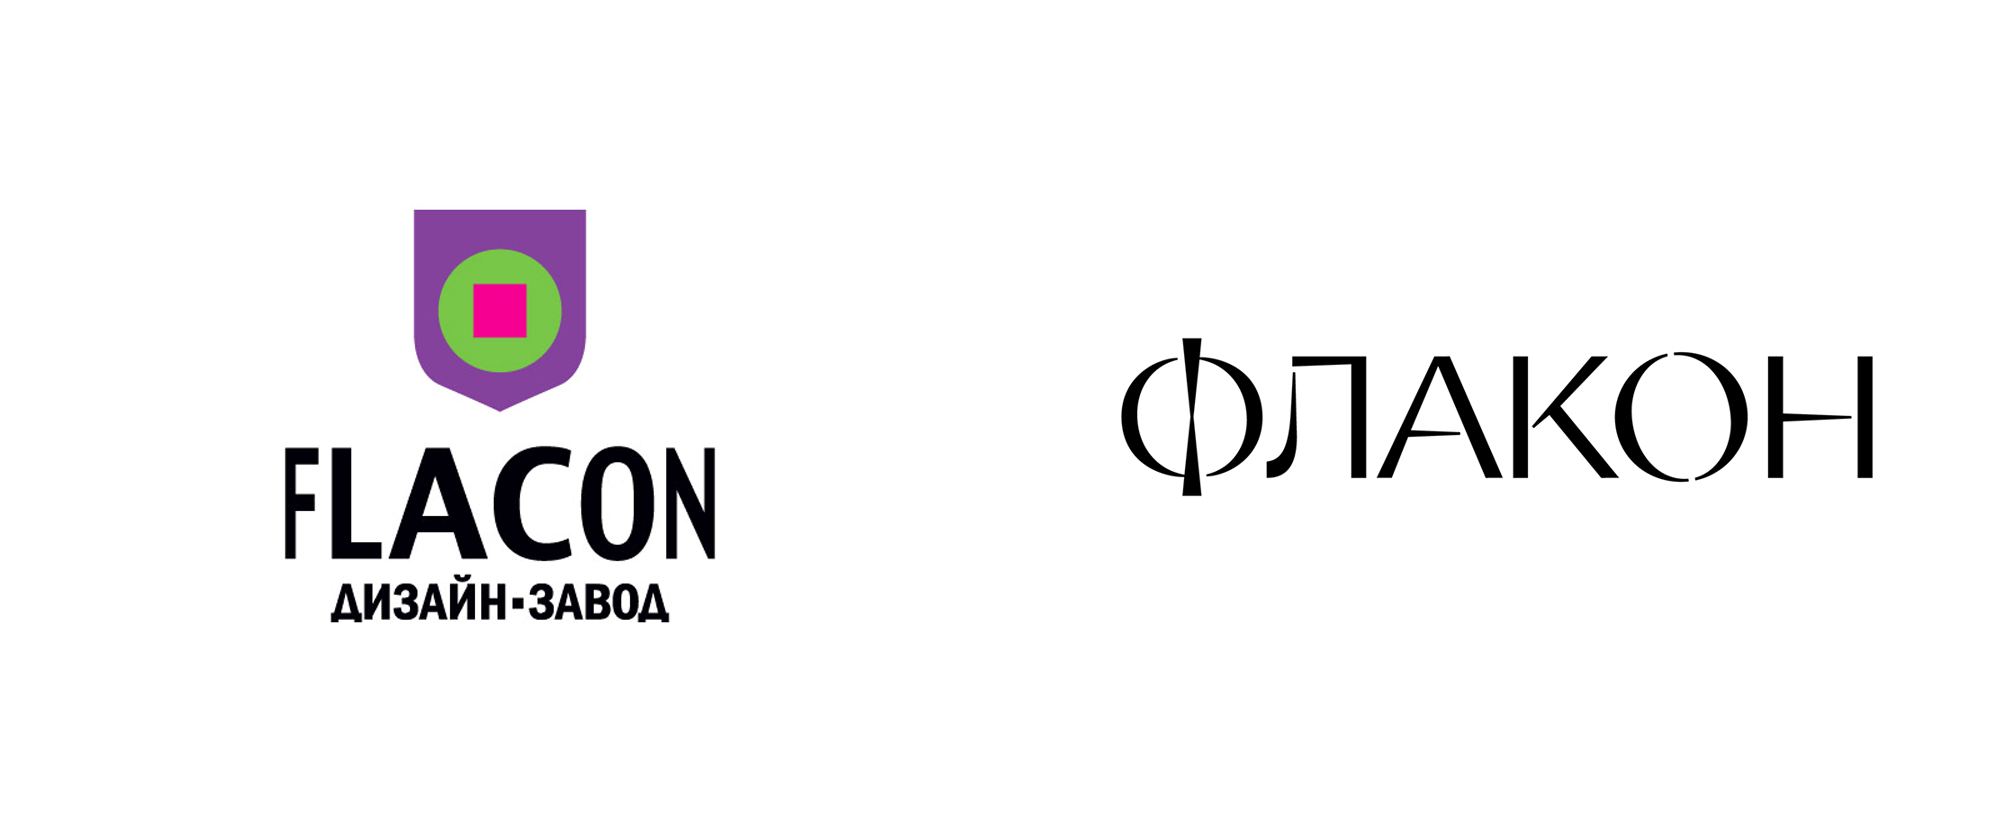 New Logo and Identity for Flacon by Shuka